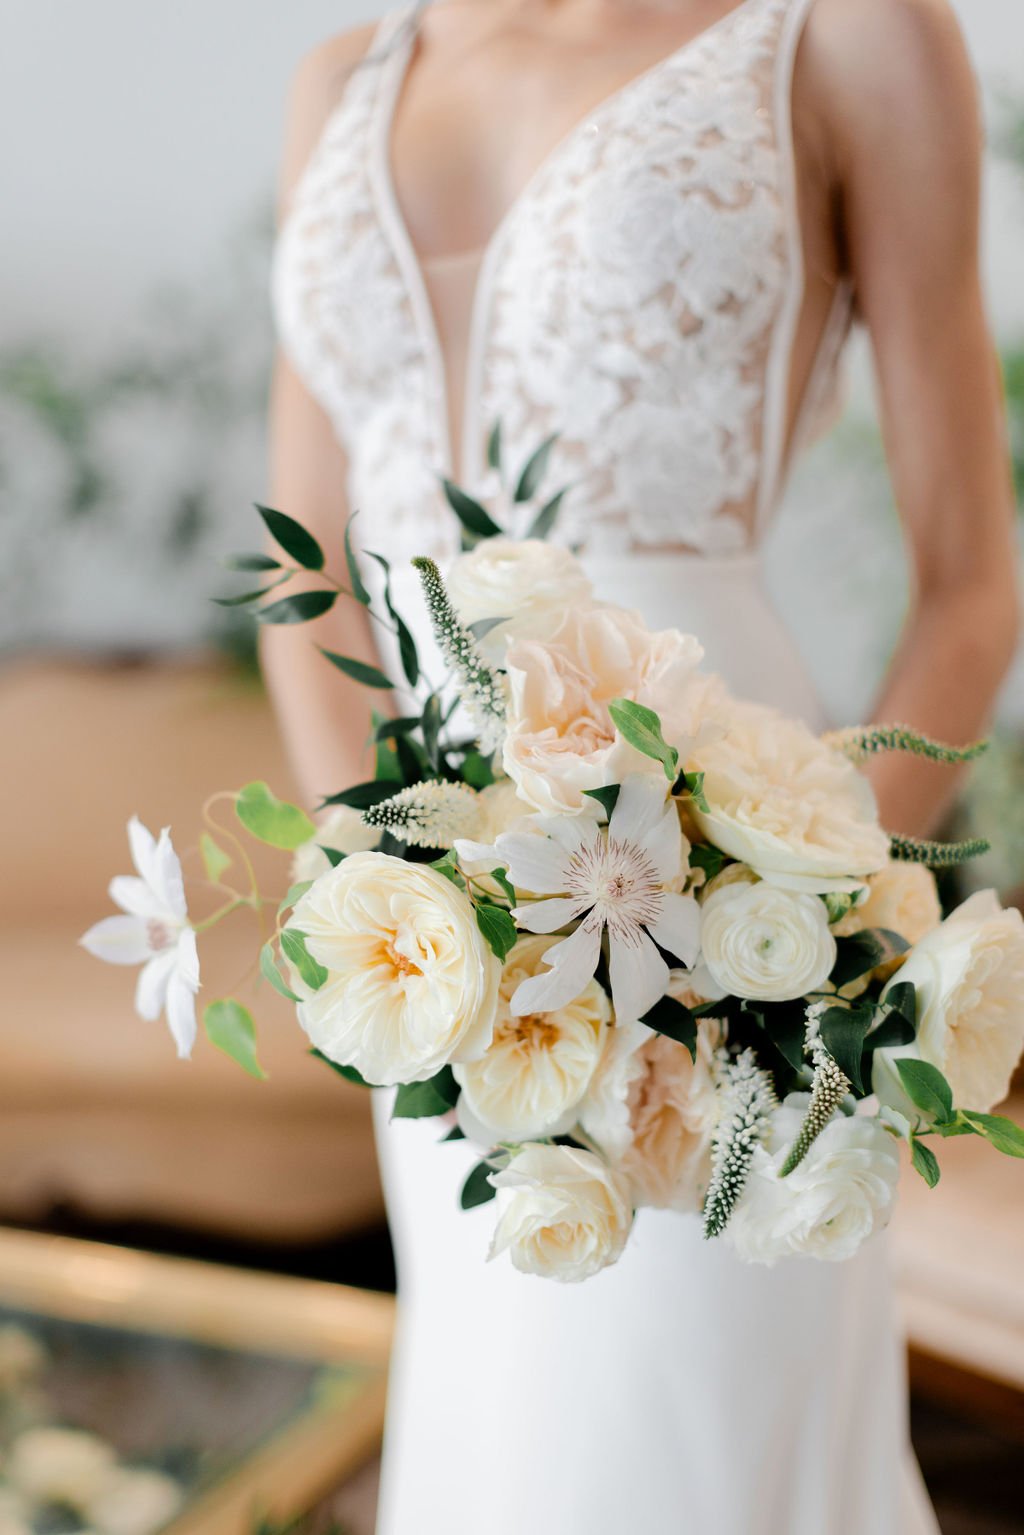 Plan-it-Terra-Missouri-Wedding-Planner-Terra-Nickelson-Woodland-Editorial-Bridal-Bouquet